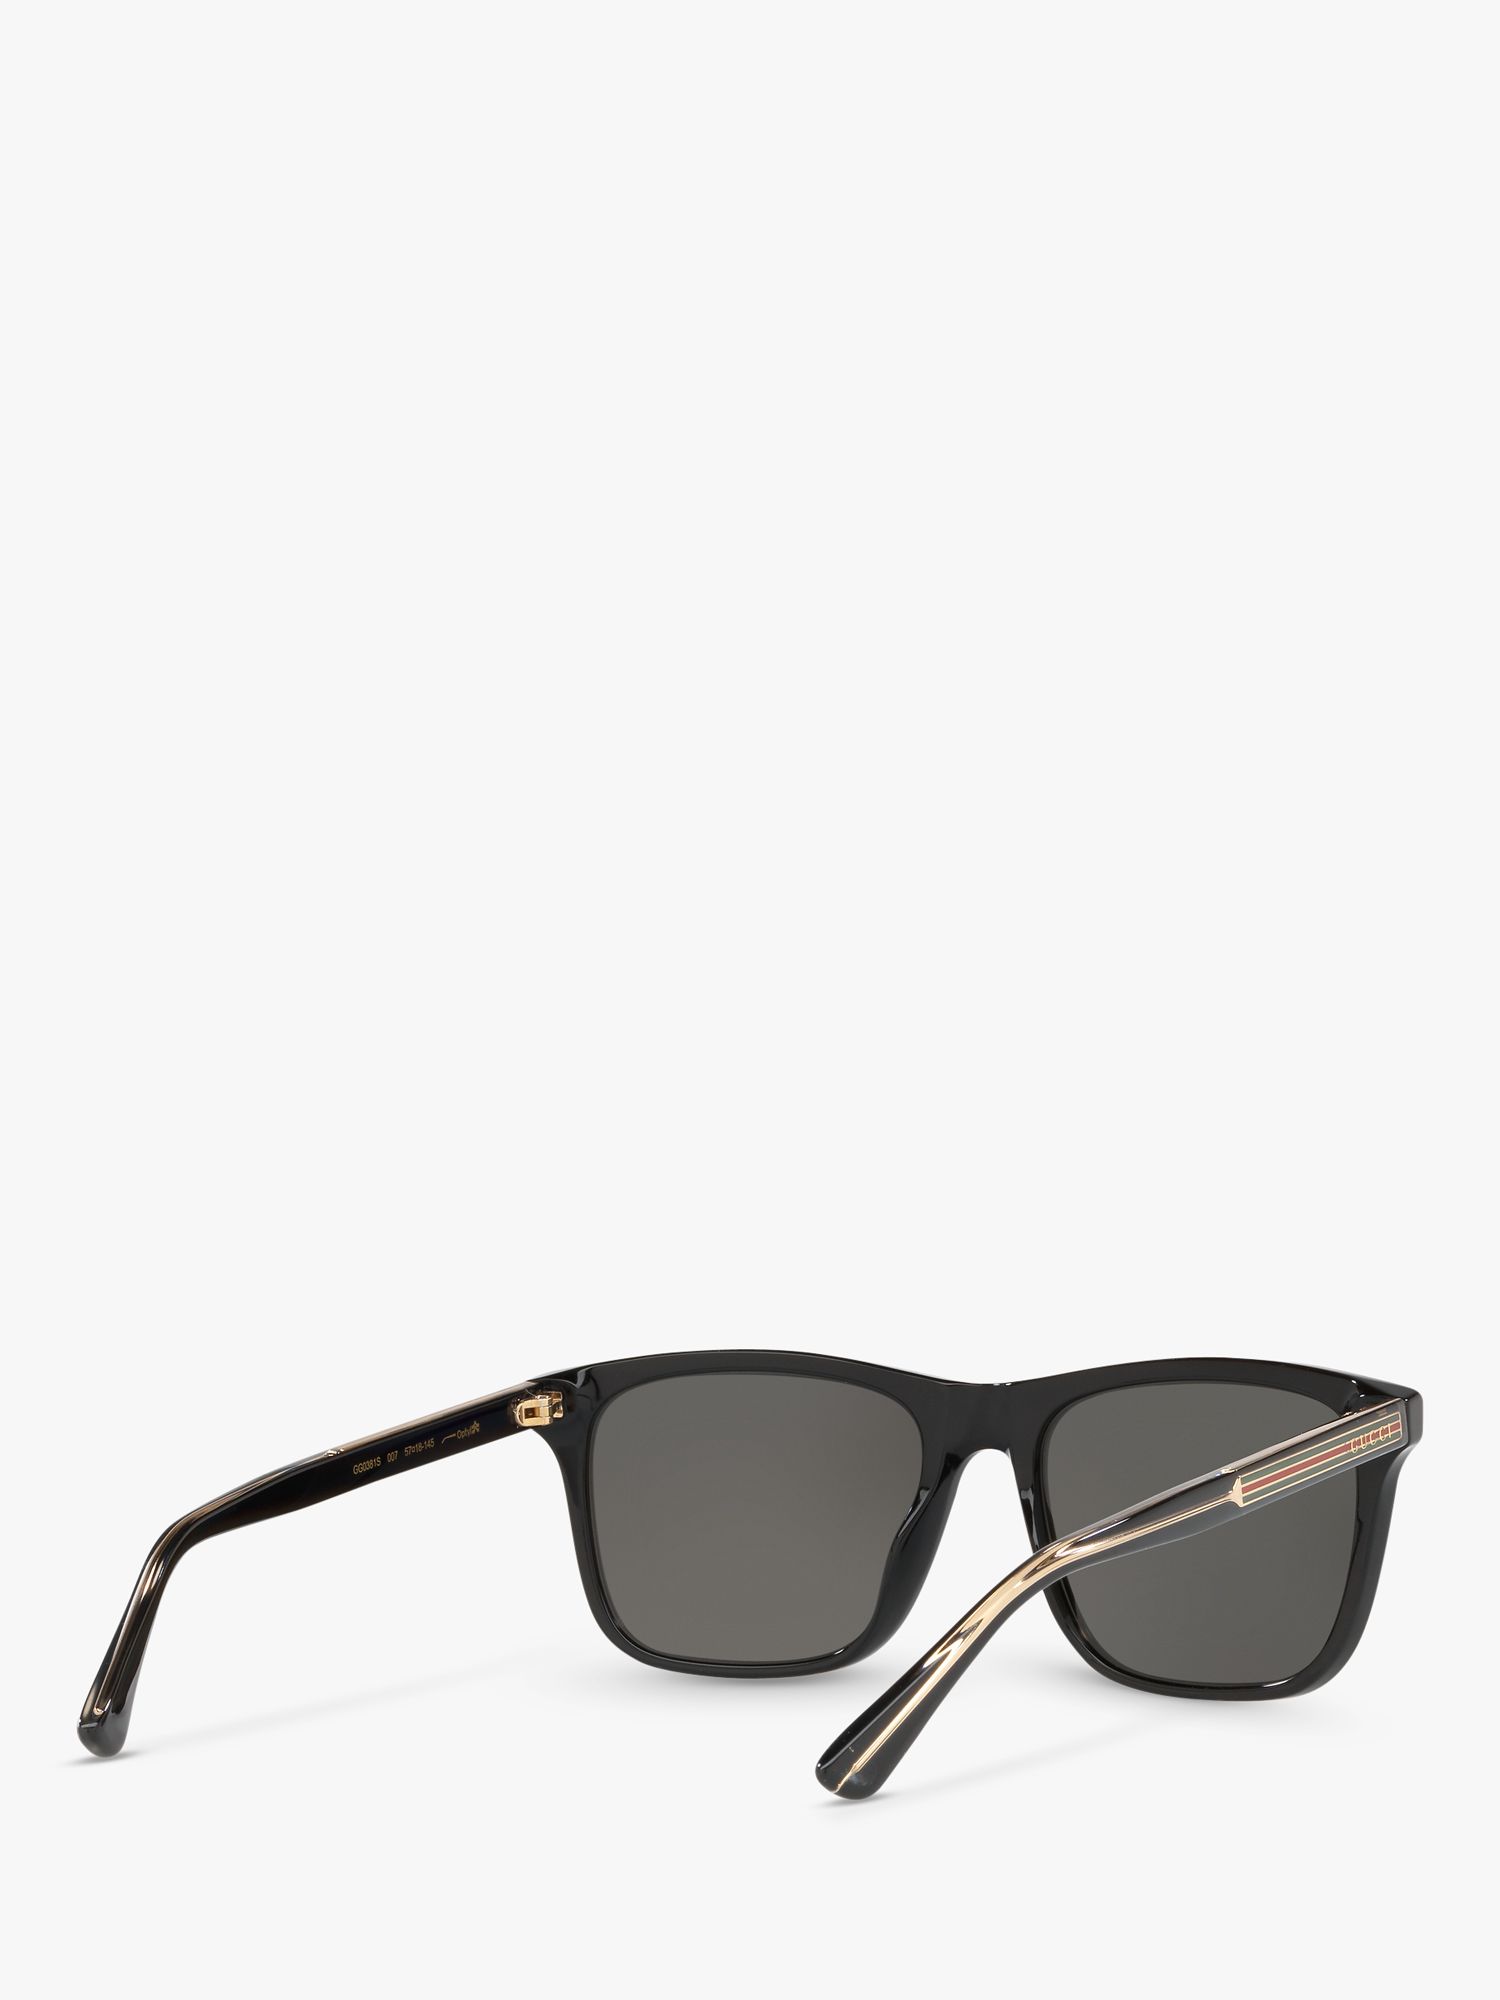 Gucci GG0381SN Men's Rectangular Sunglasses, Black/Grey at John Lewis ...